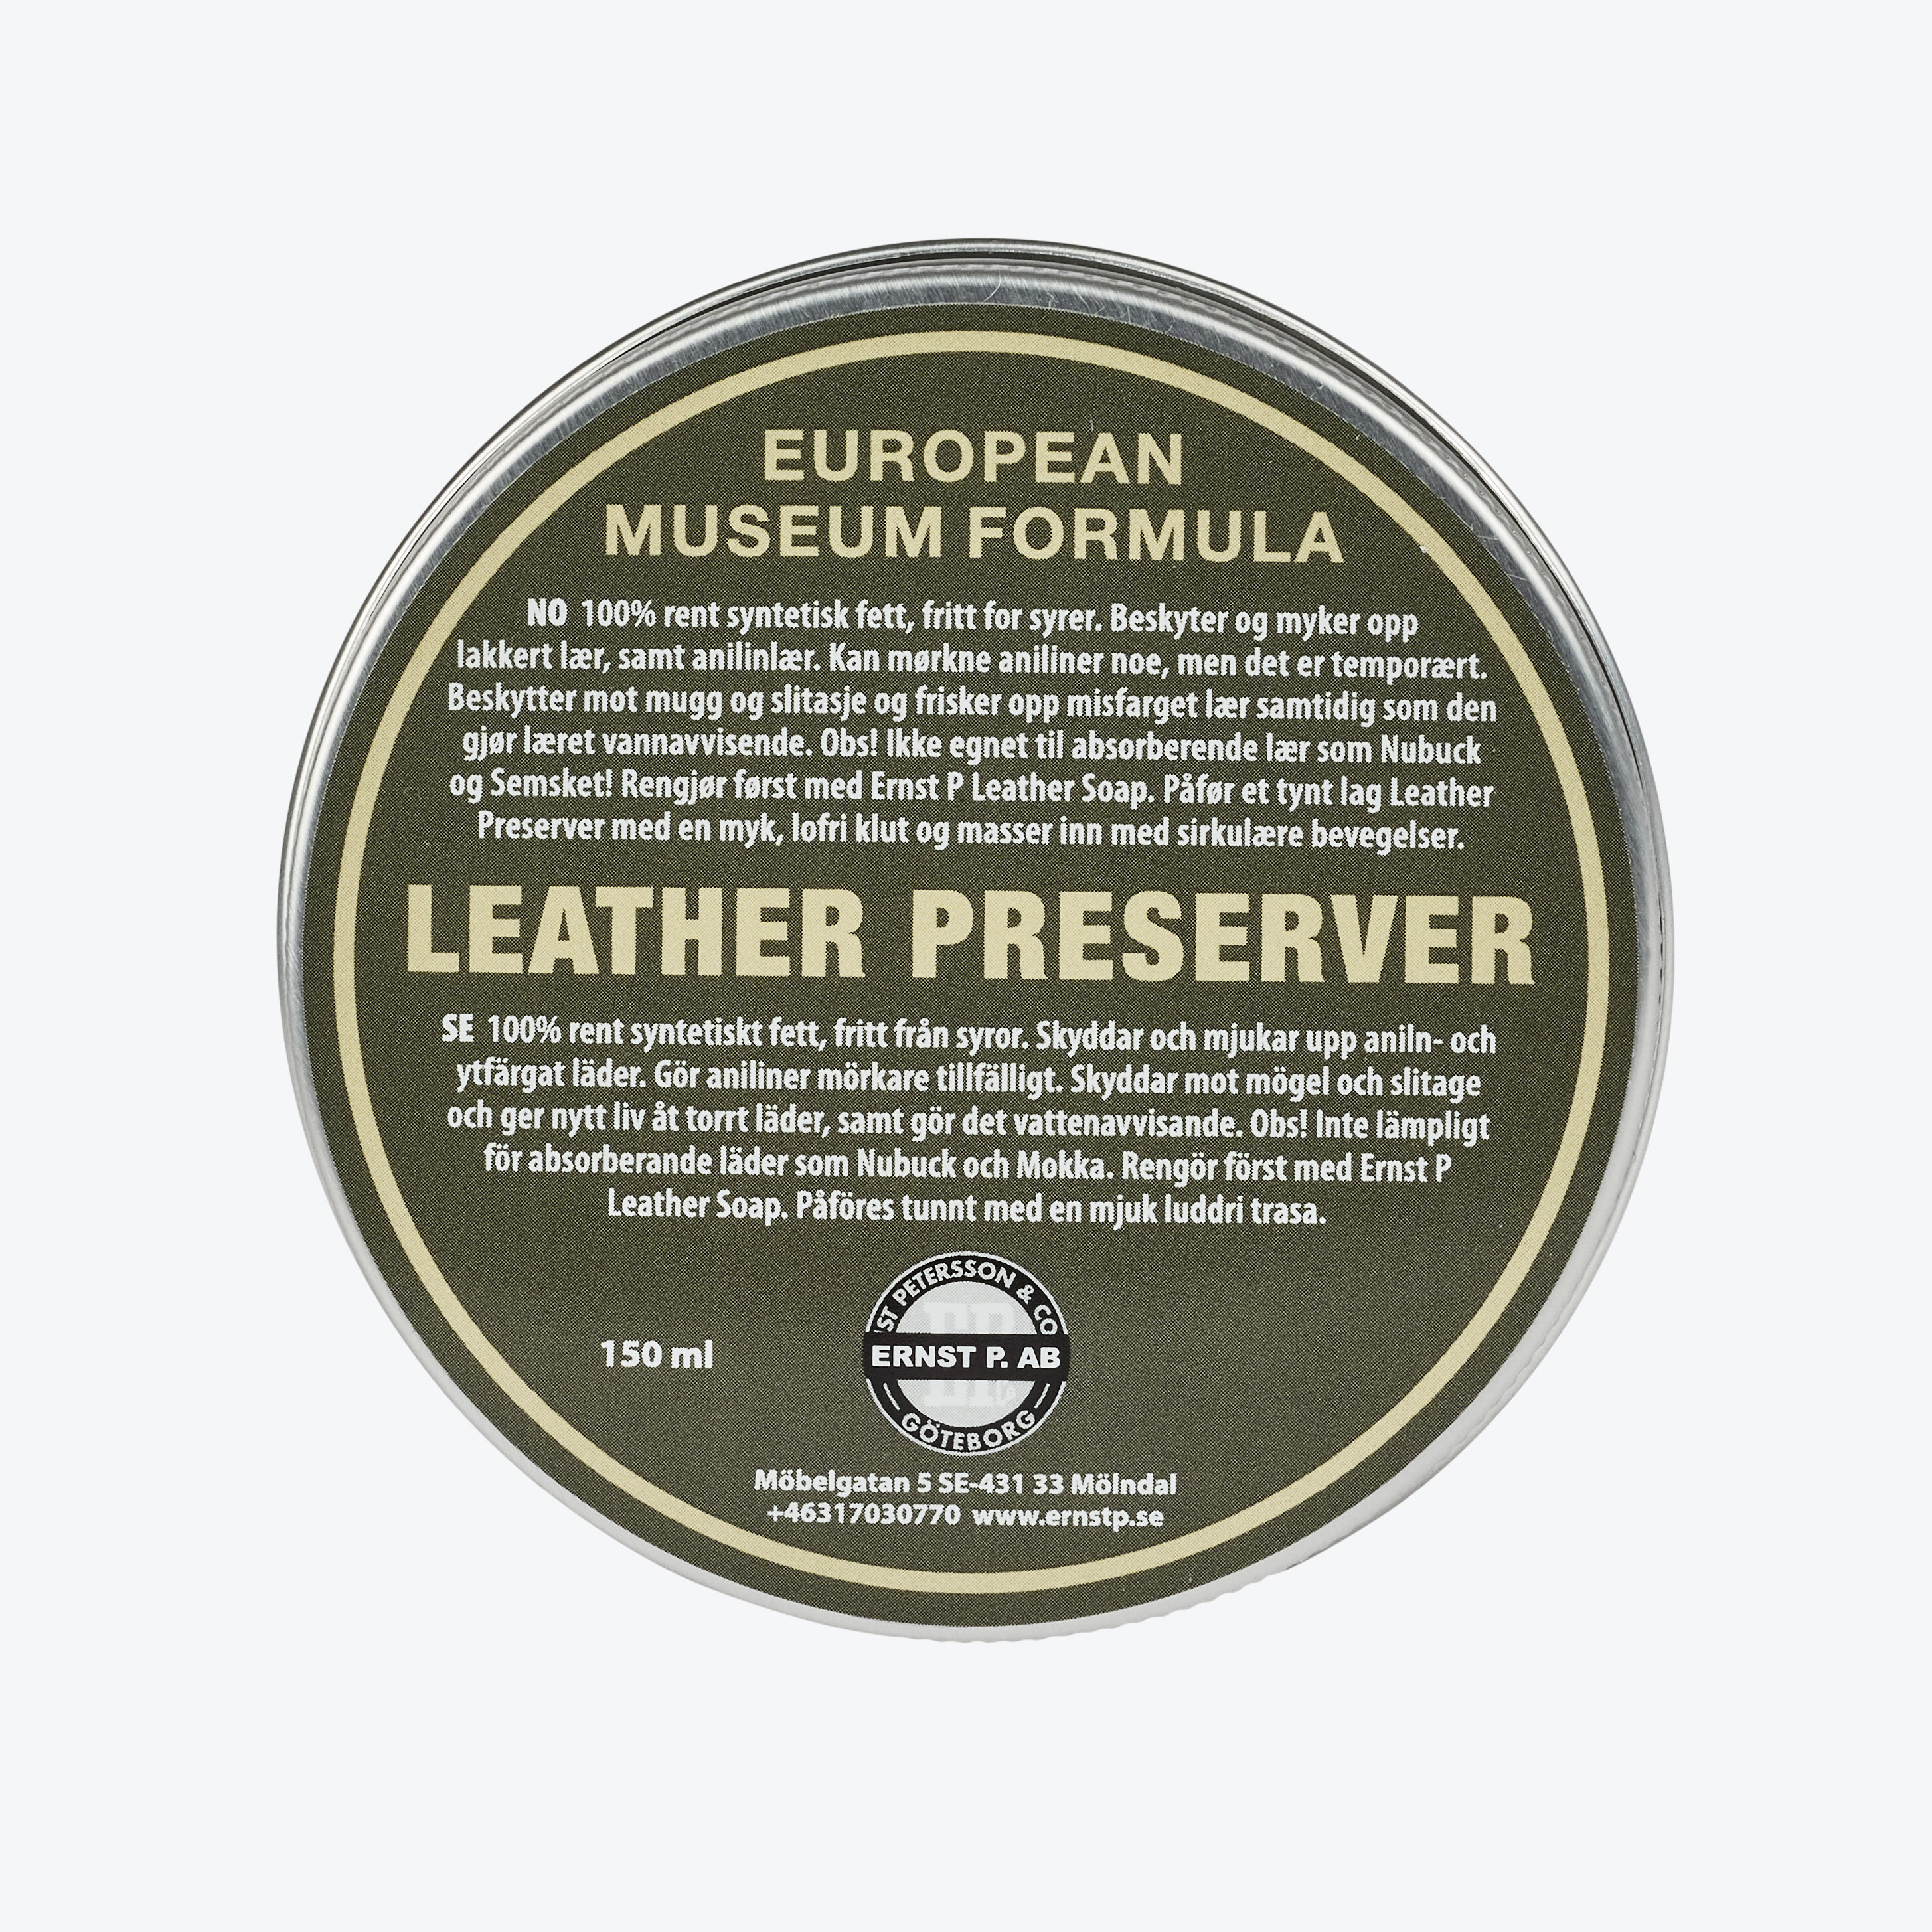 Leather preserver